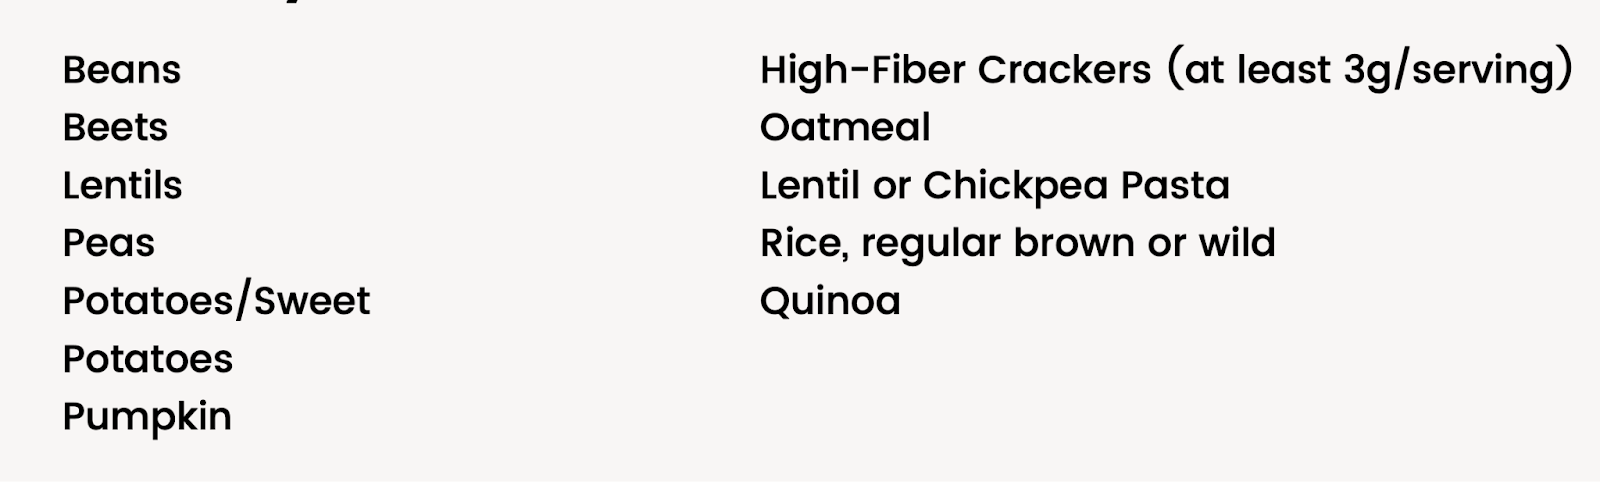 beans, beets, lentils, peas, sweet potatoes, potatoes, pumpkin, high-fiber crackers (at least 3g/serving), oatmeal, lentil or chickpea pasta, rice (regular, brown, or wild), quinoa